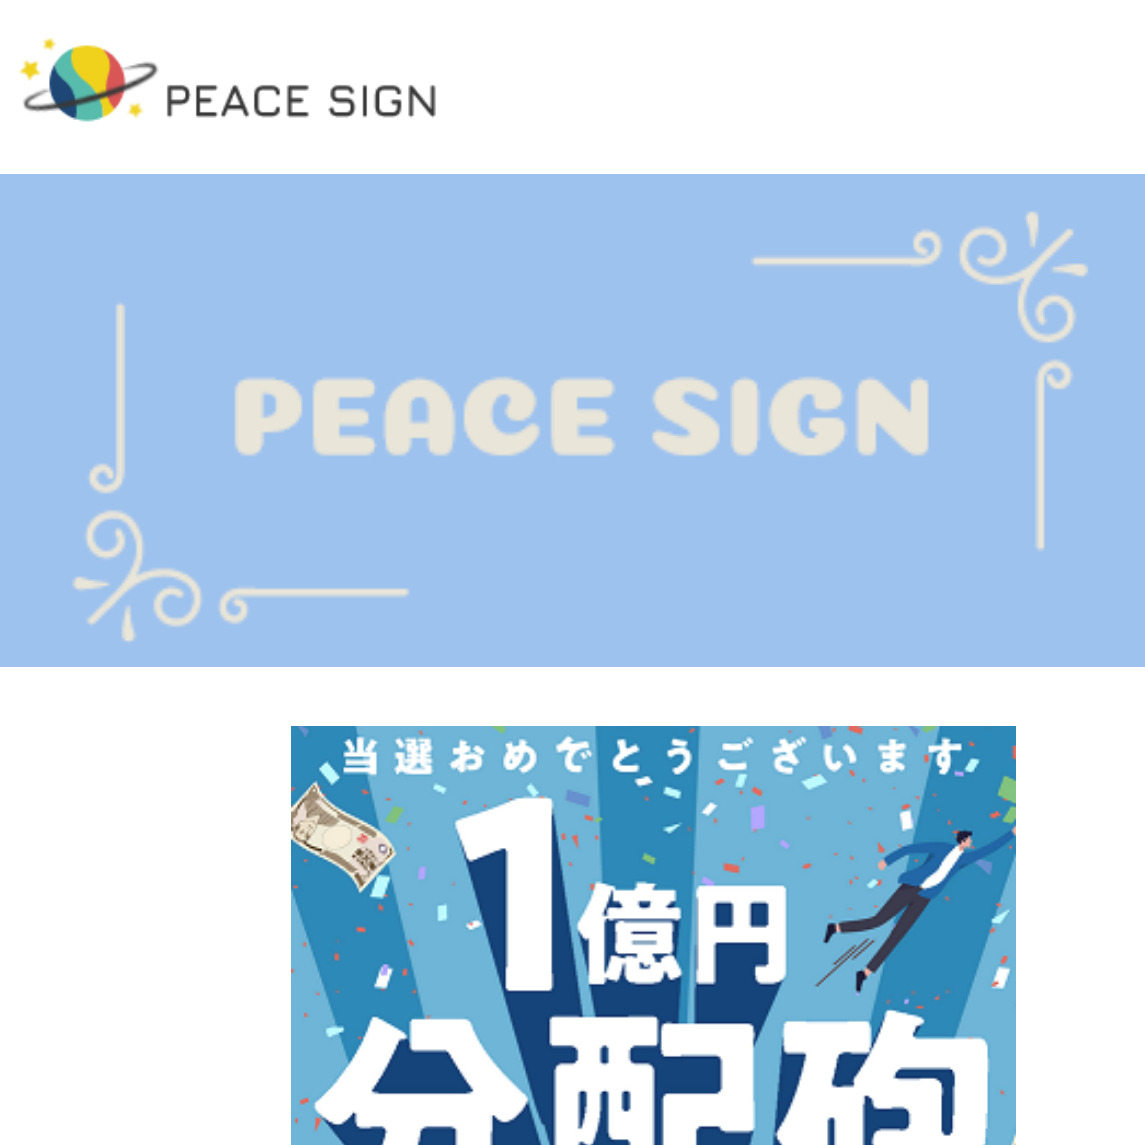 PEACE SIGN(トップ画面)